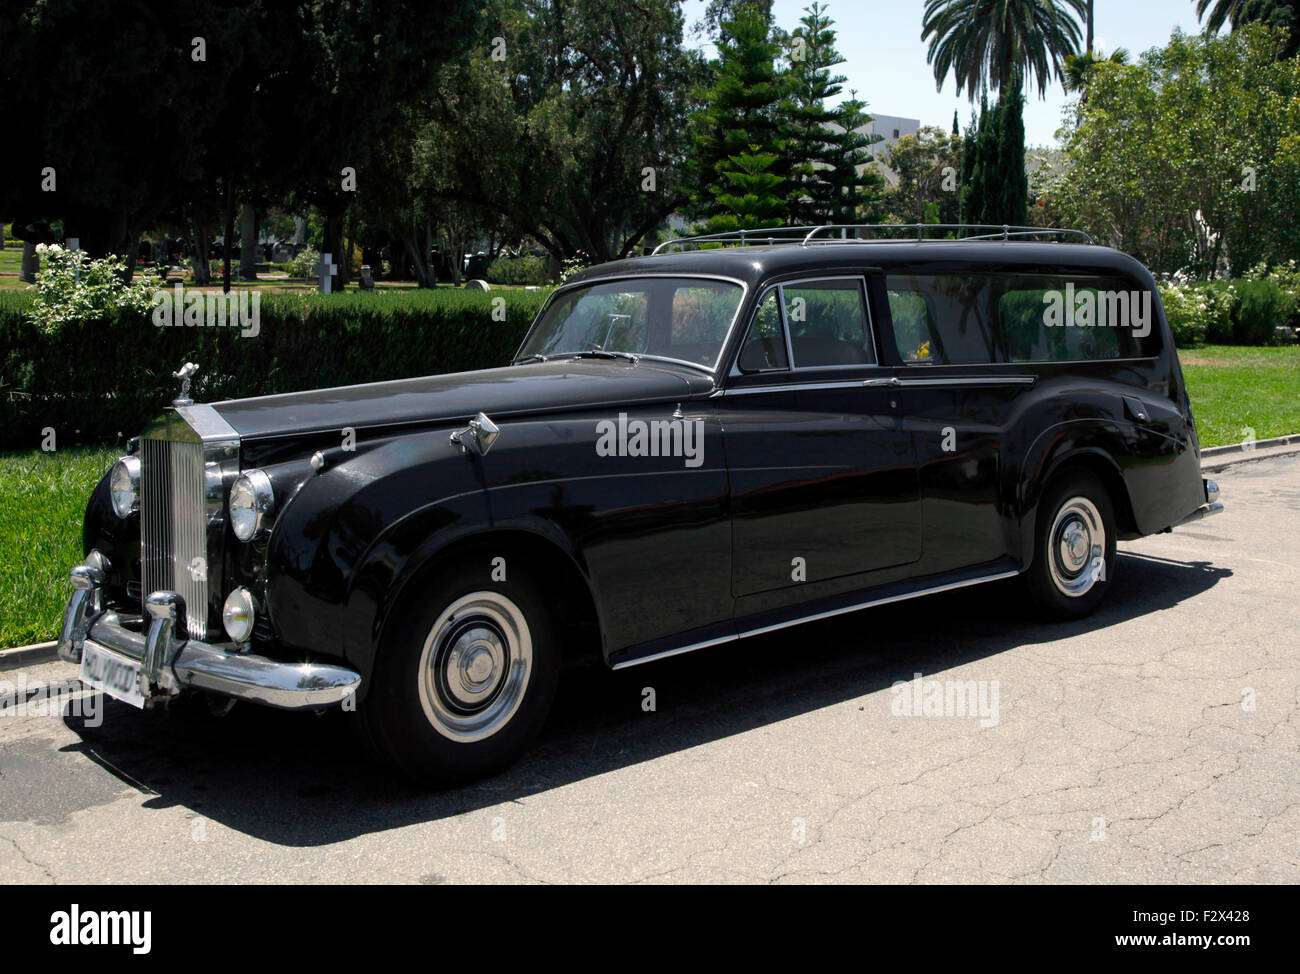 Black Rolls Royce Phantom hearse in Hollywood, CA, 2015. Stock Photo